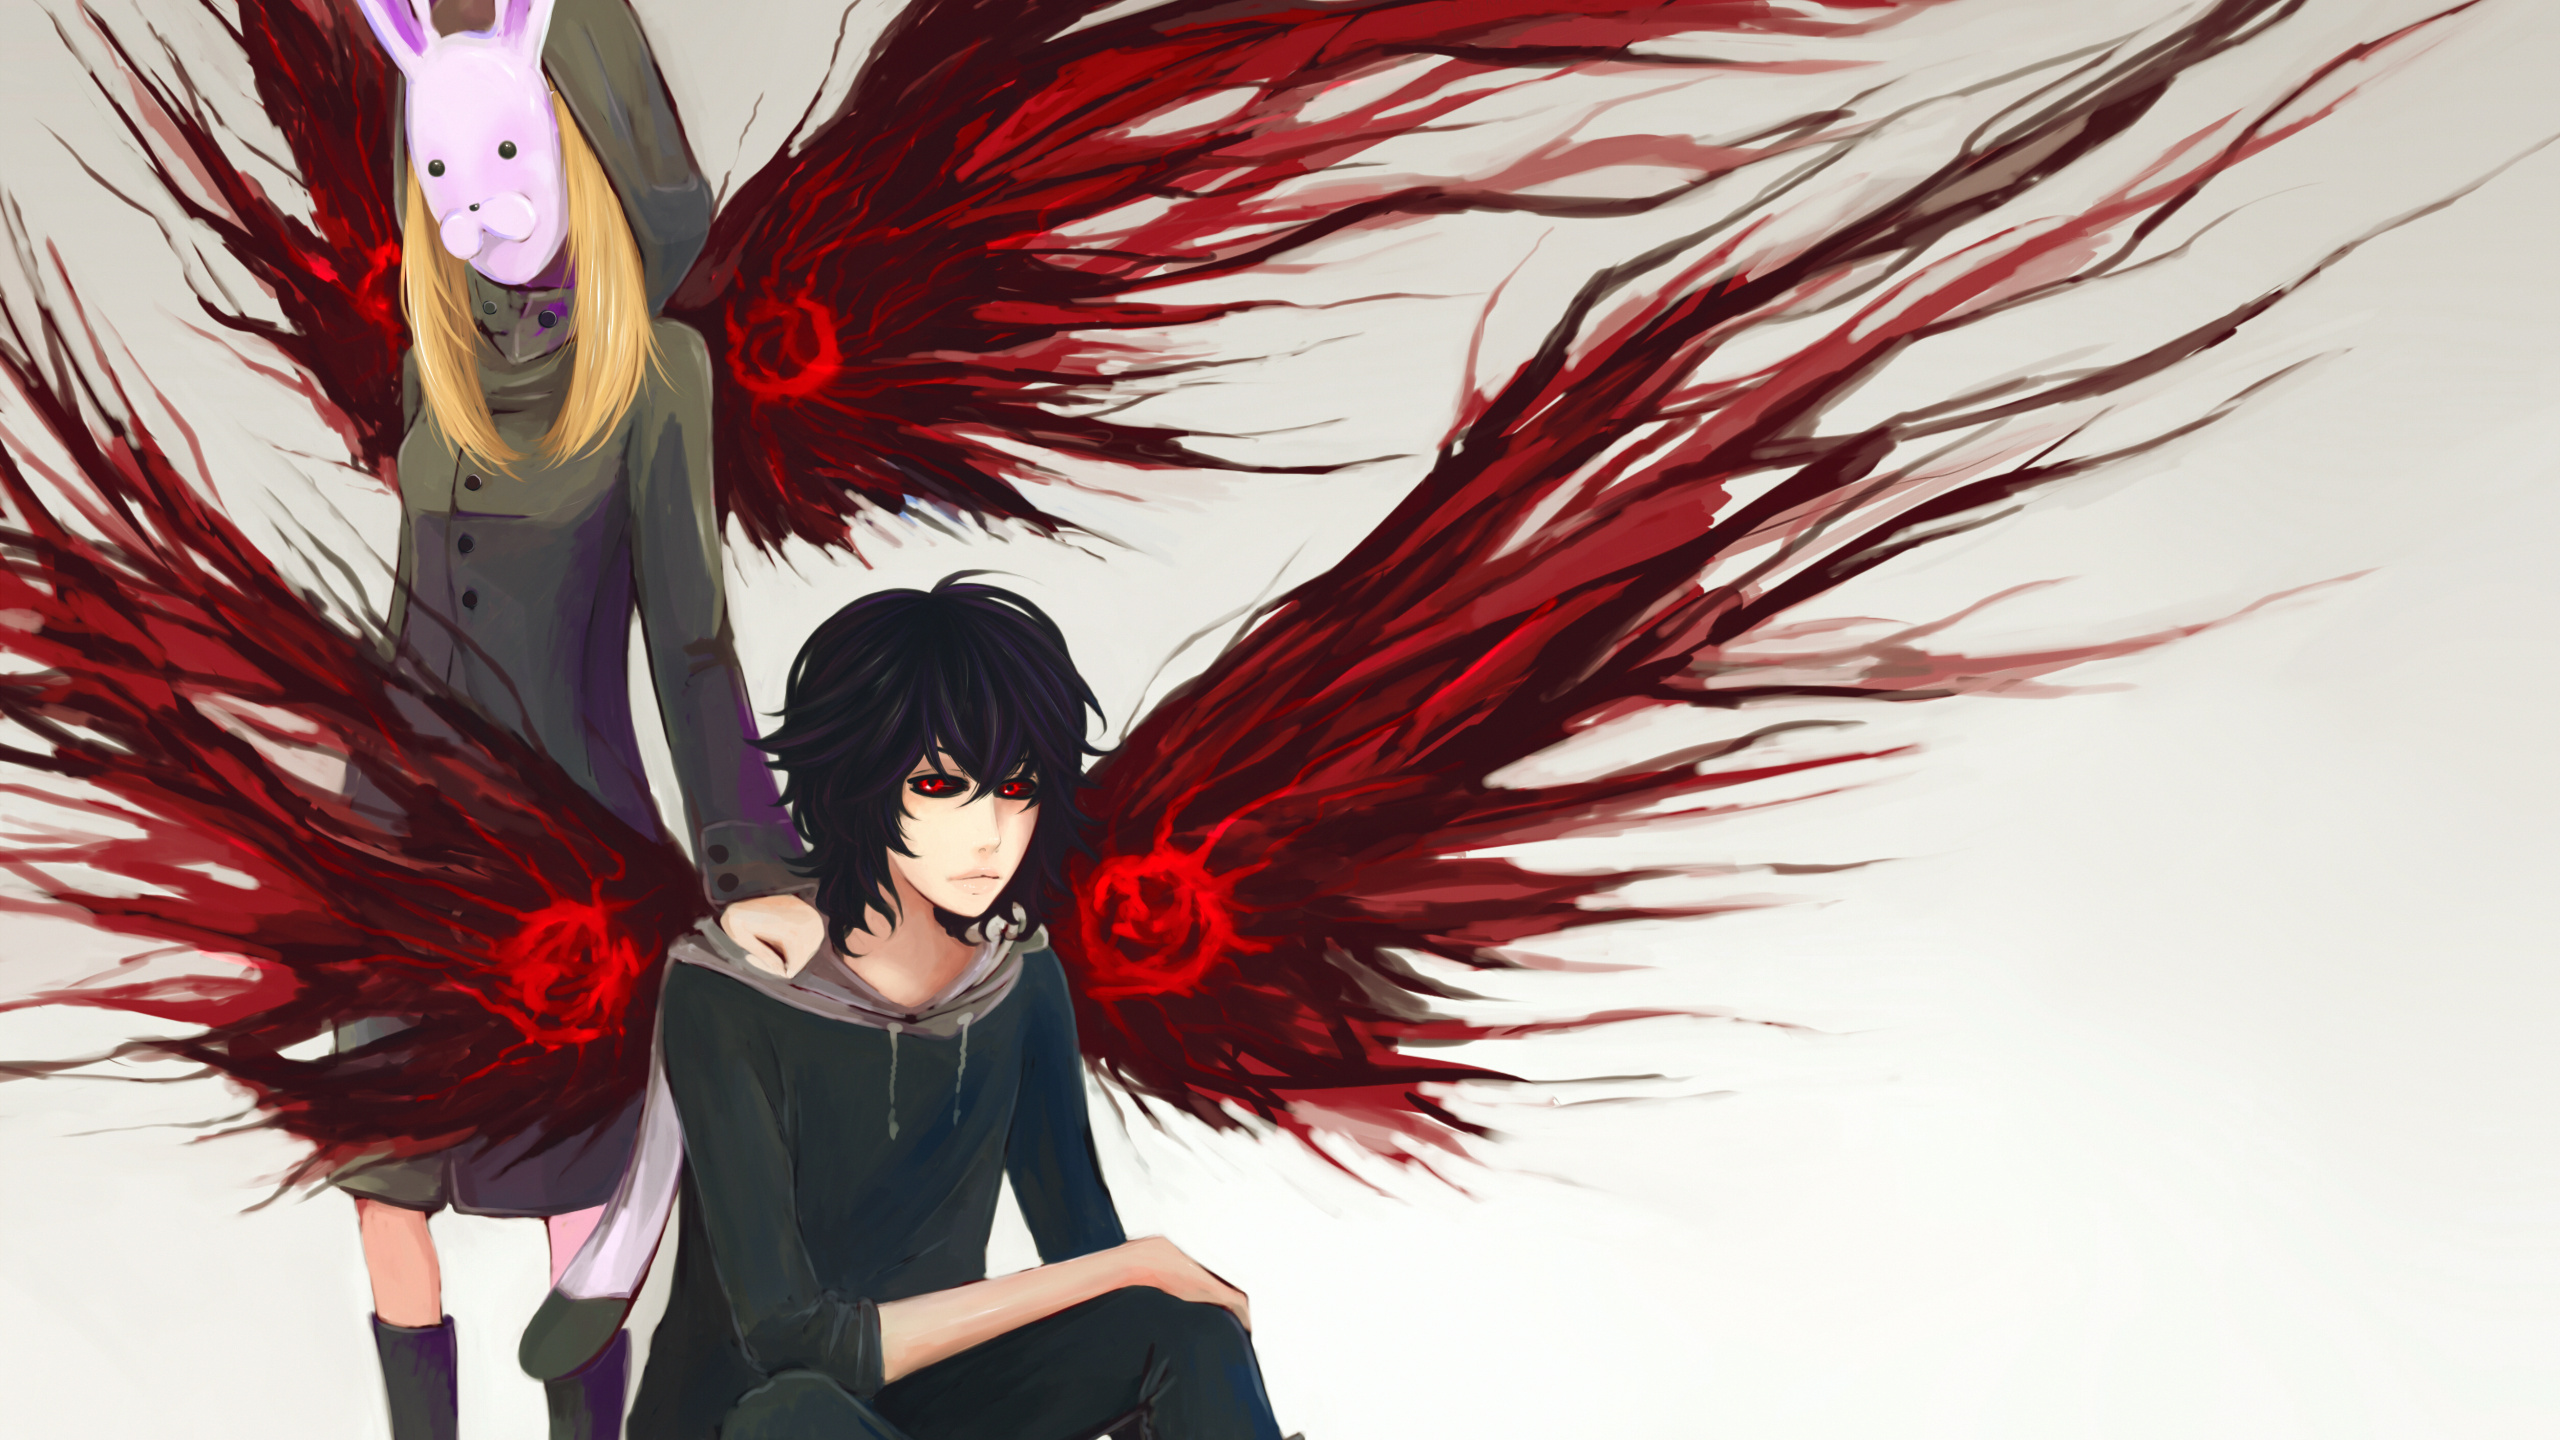 Femme en Robe Noire et Rouge Personnage D'anime. Wallpaper in 2560x1440 Resolution